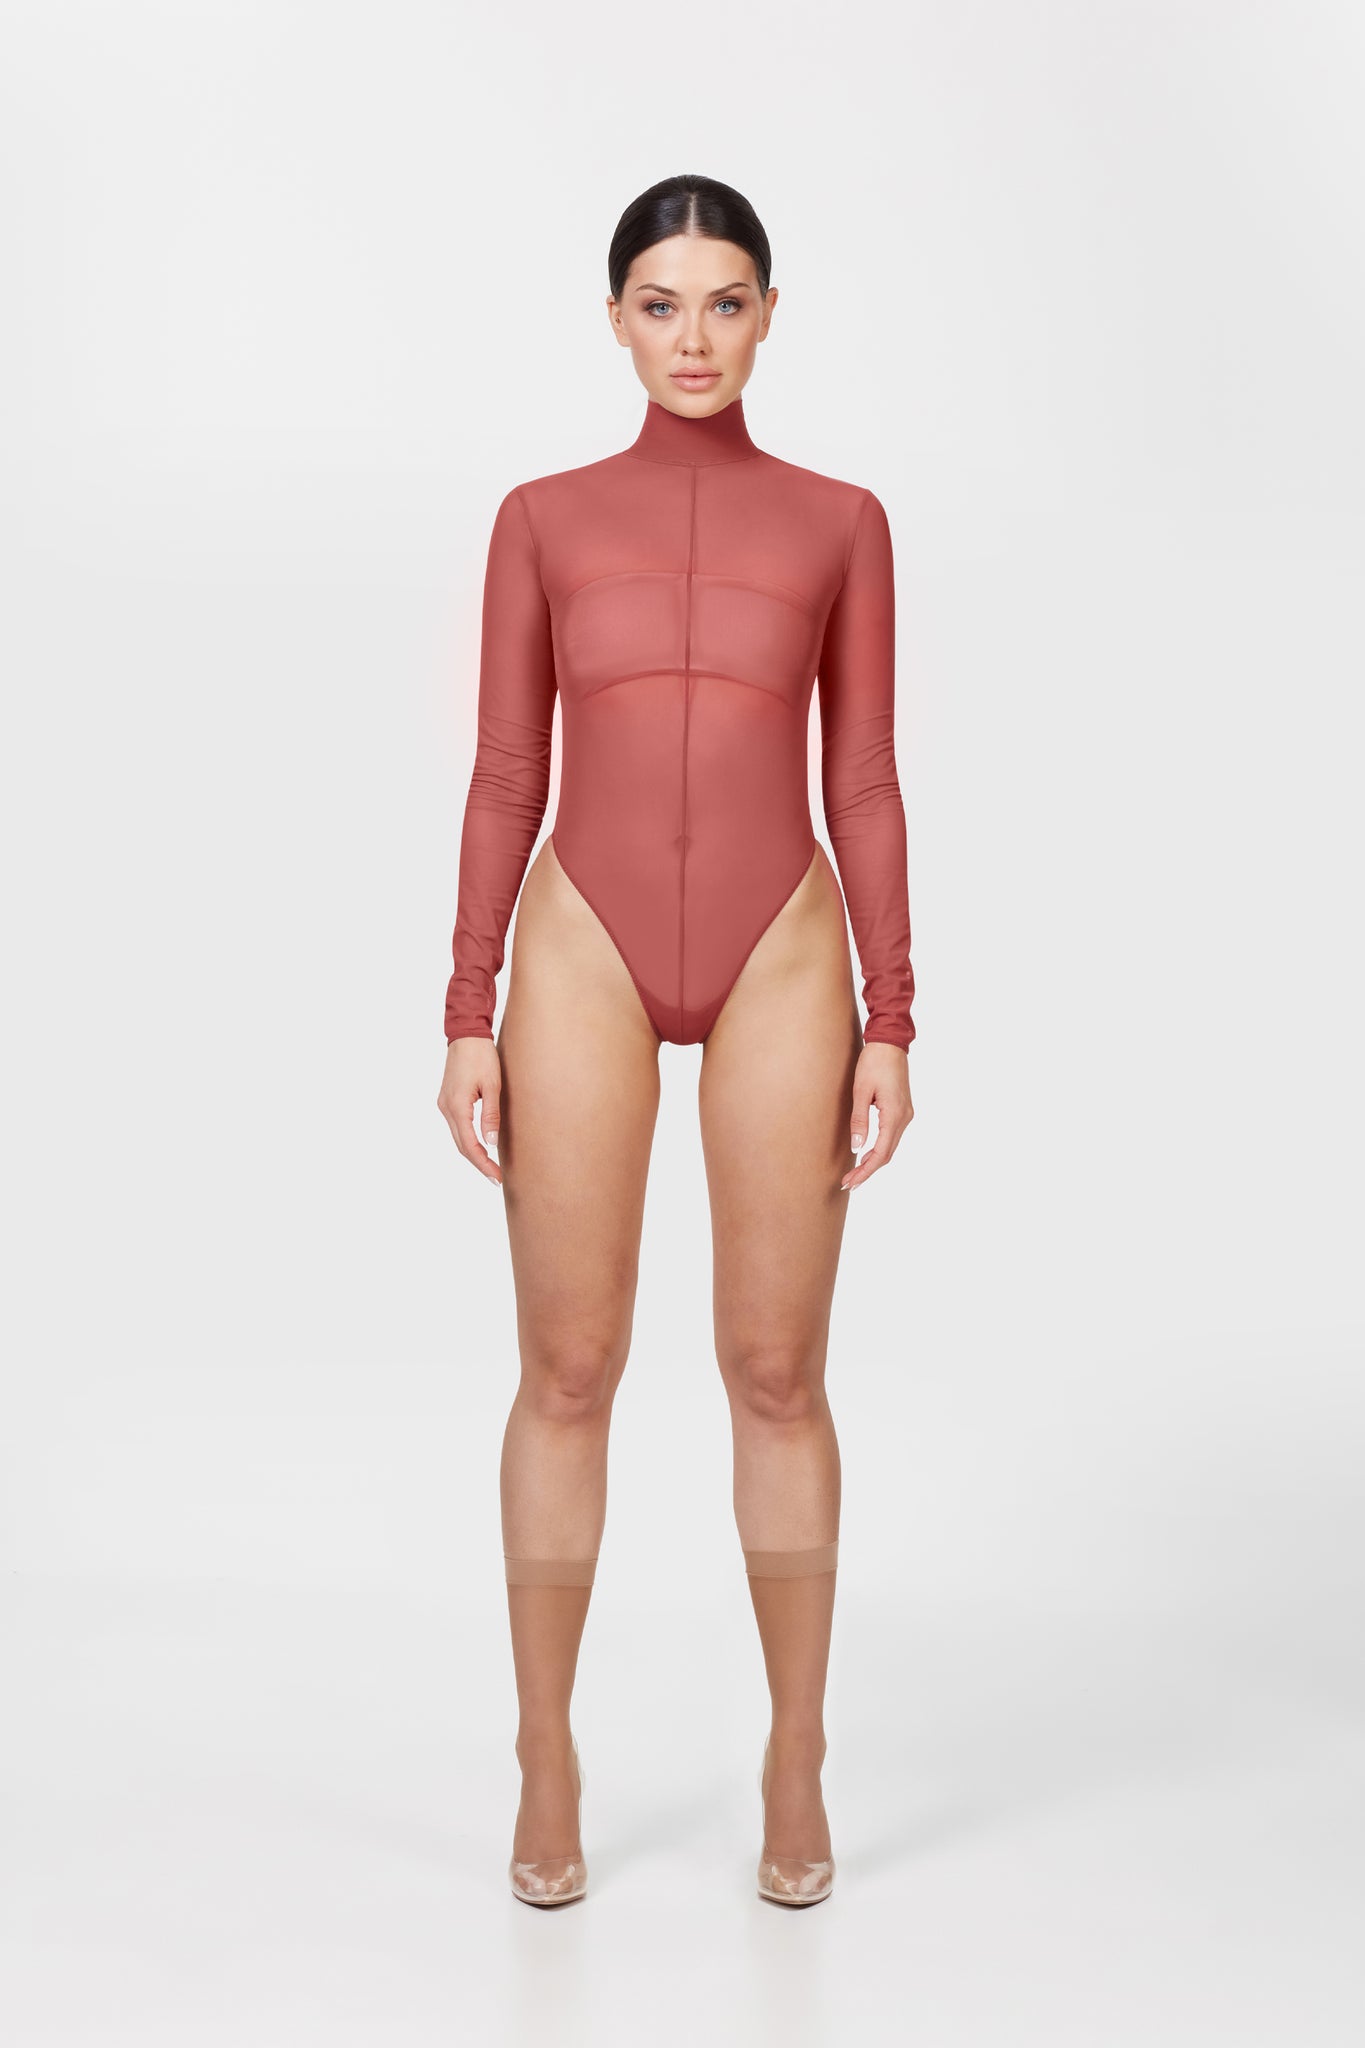 Giorgia by Selene laser cut modeling bodysuit with open back